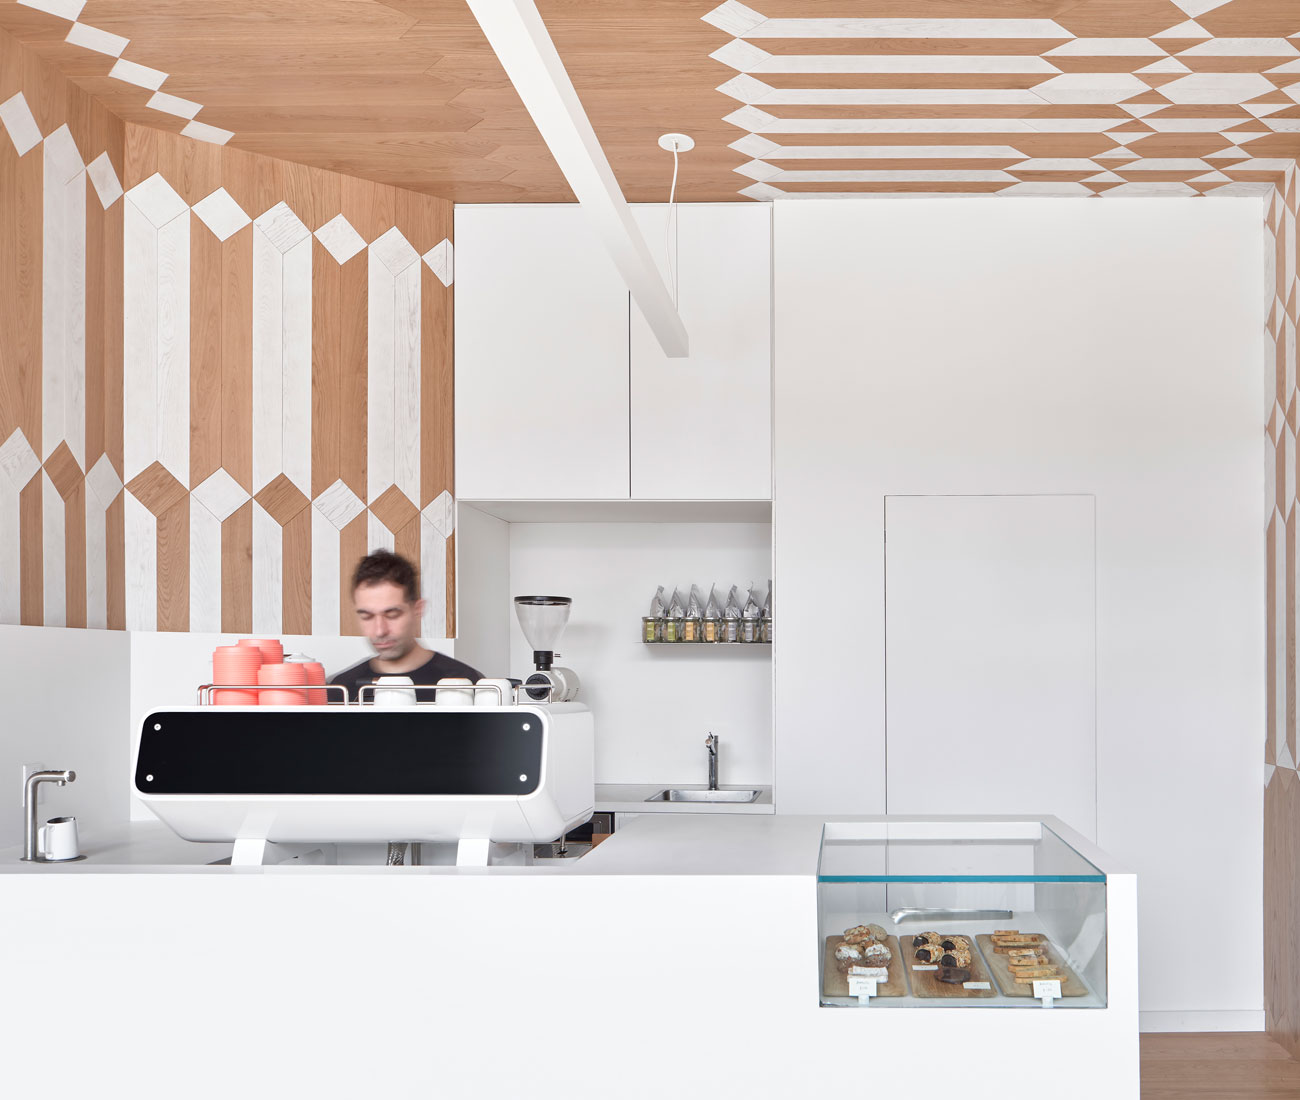 Milky's Coffee - Fraser Greenberg - Cafe Design Toronto Designlines Magazine Batay-Csorba Architects Relative Space